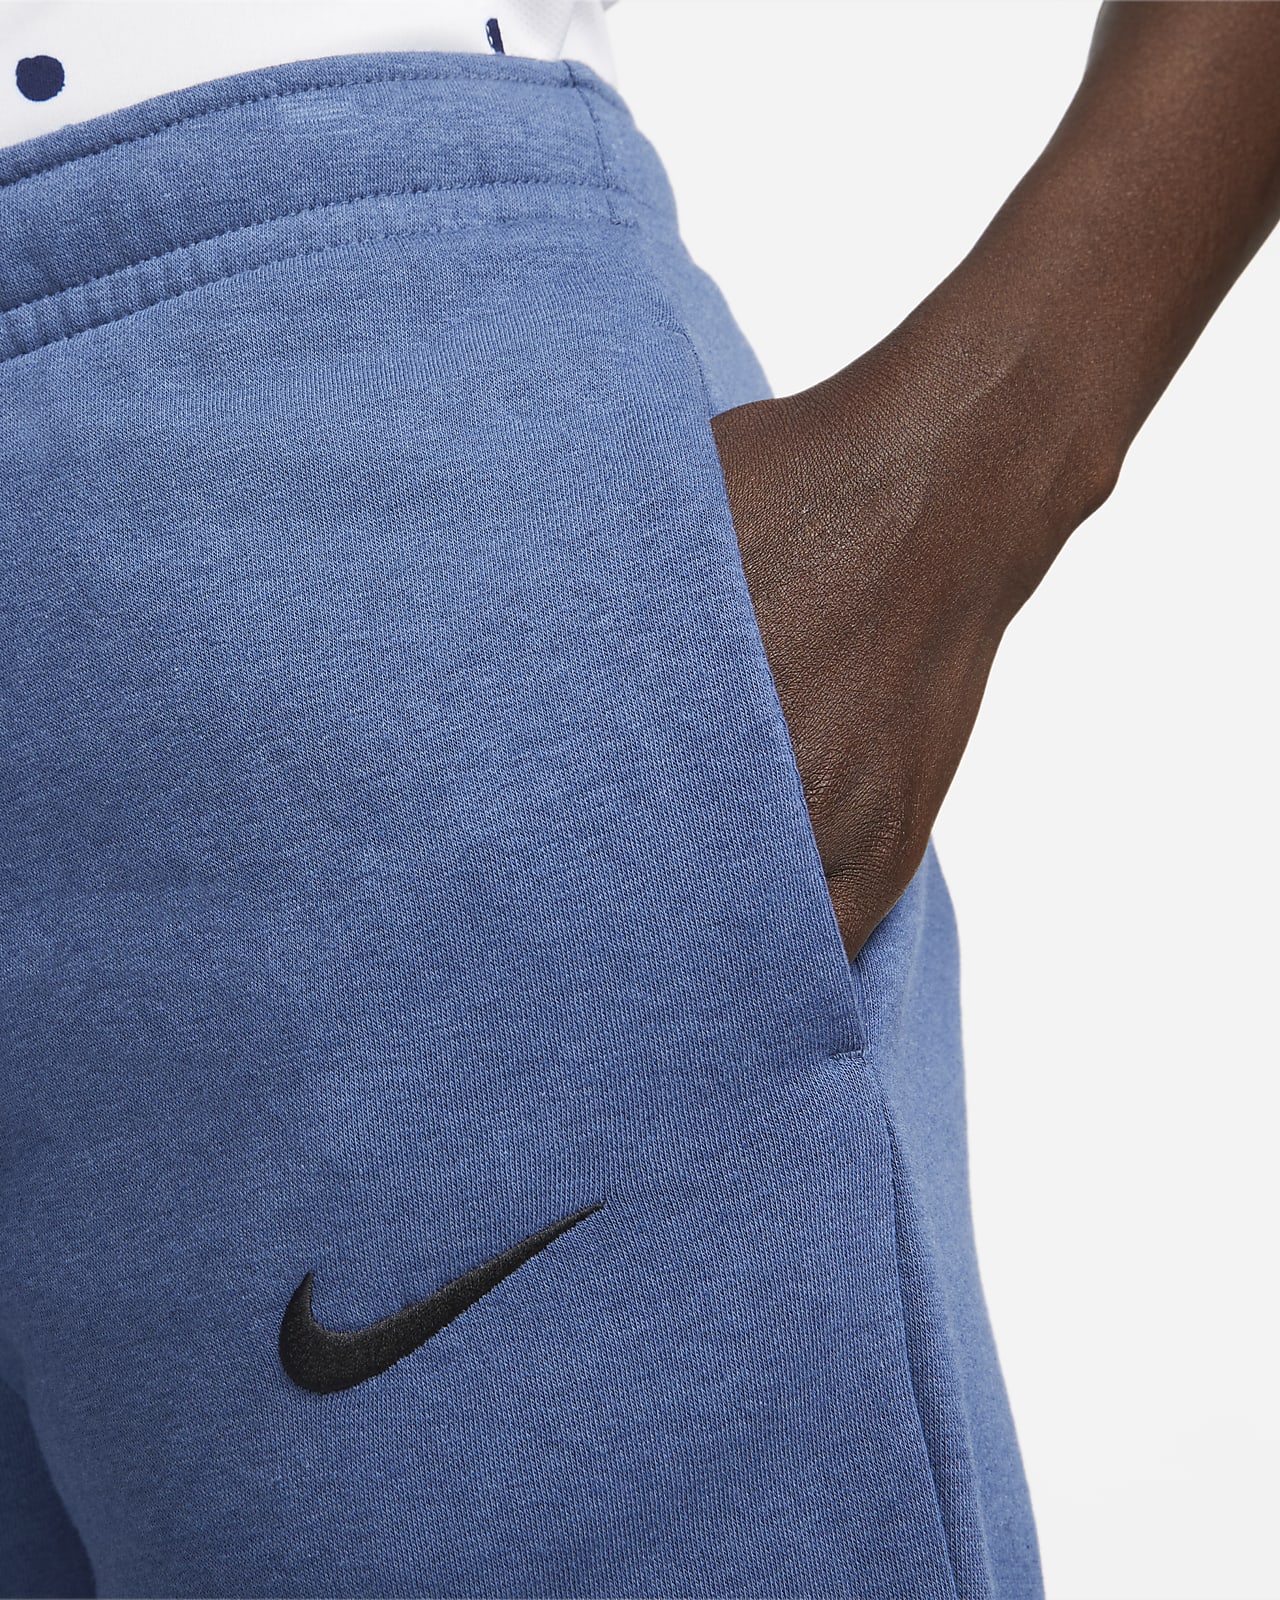 U.S. Club Fleece Women's Nike Mid-Rise Pants.